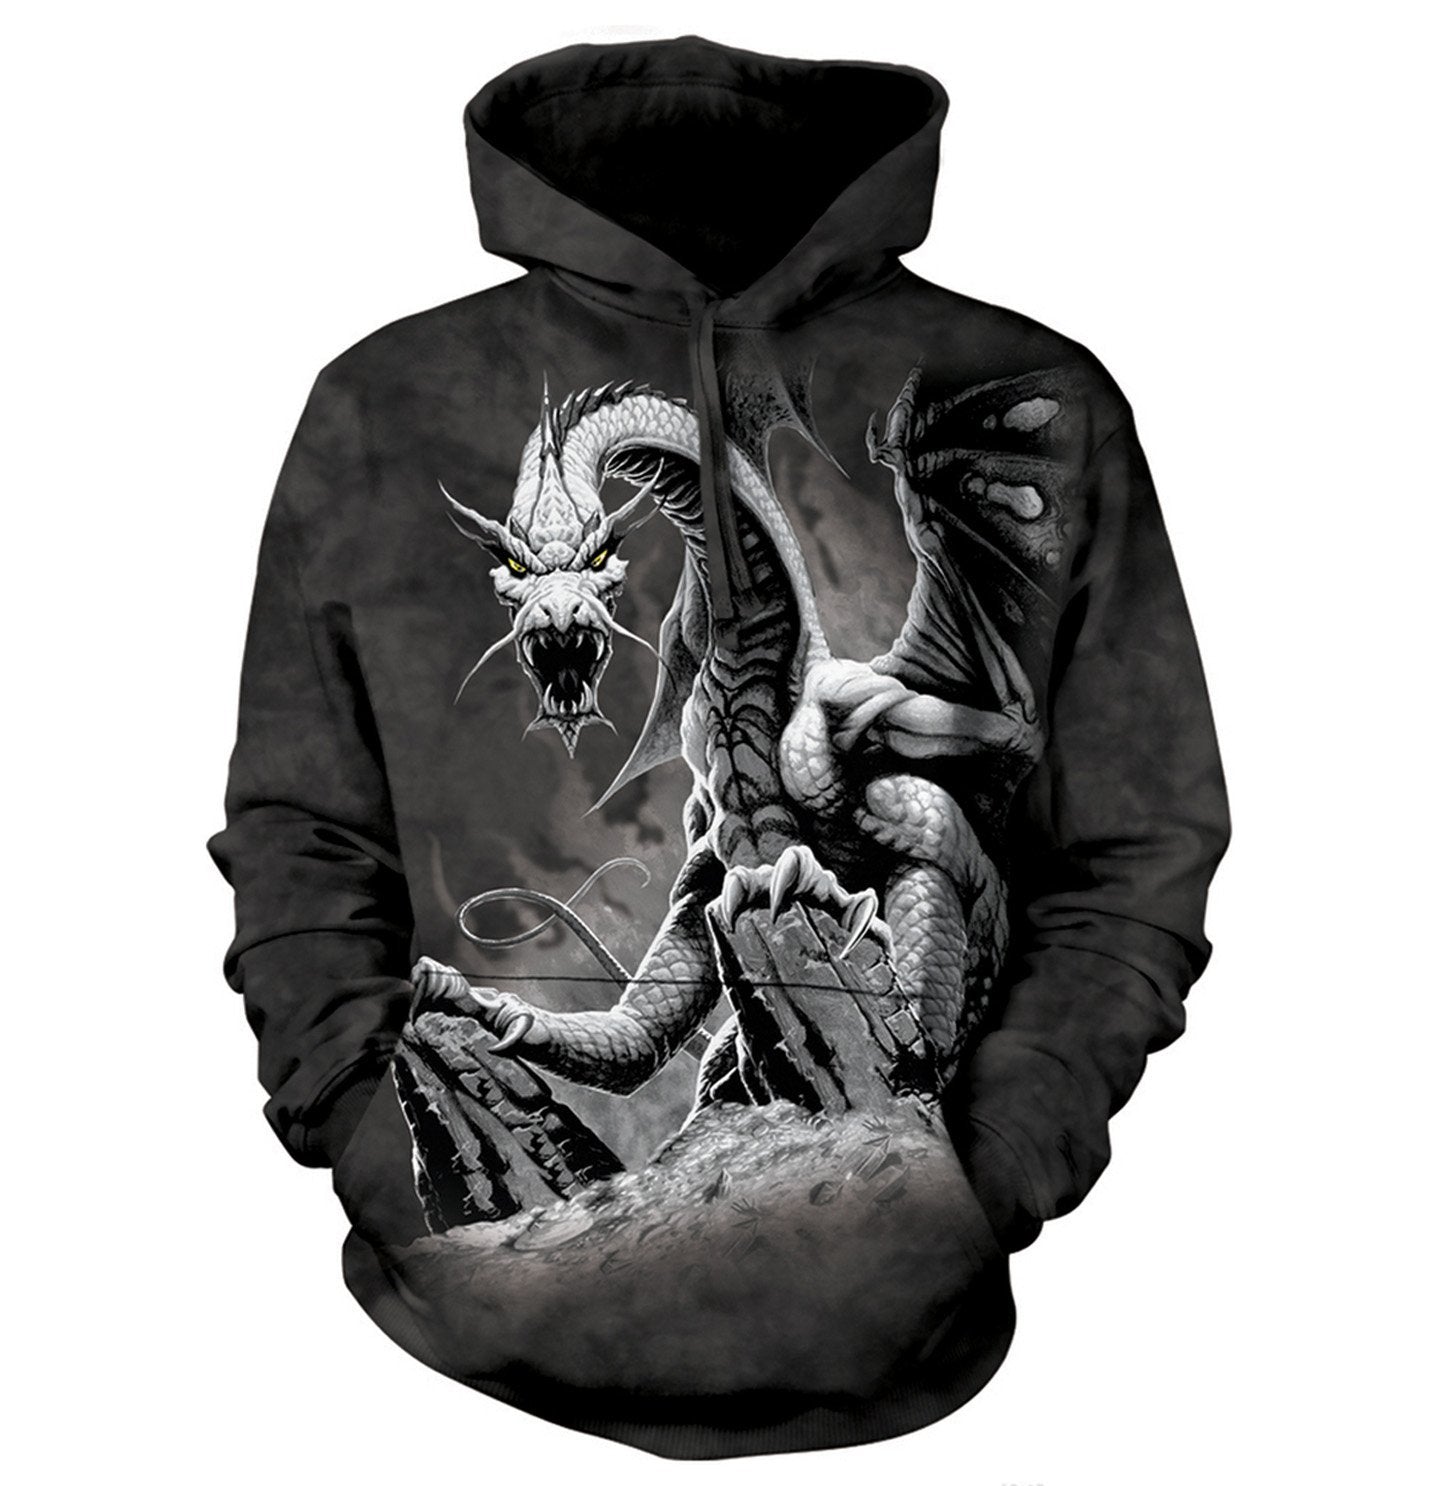 Animal Pride - Black Dragon - Adult Unisex Hoodie Sweatshirt